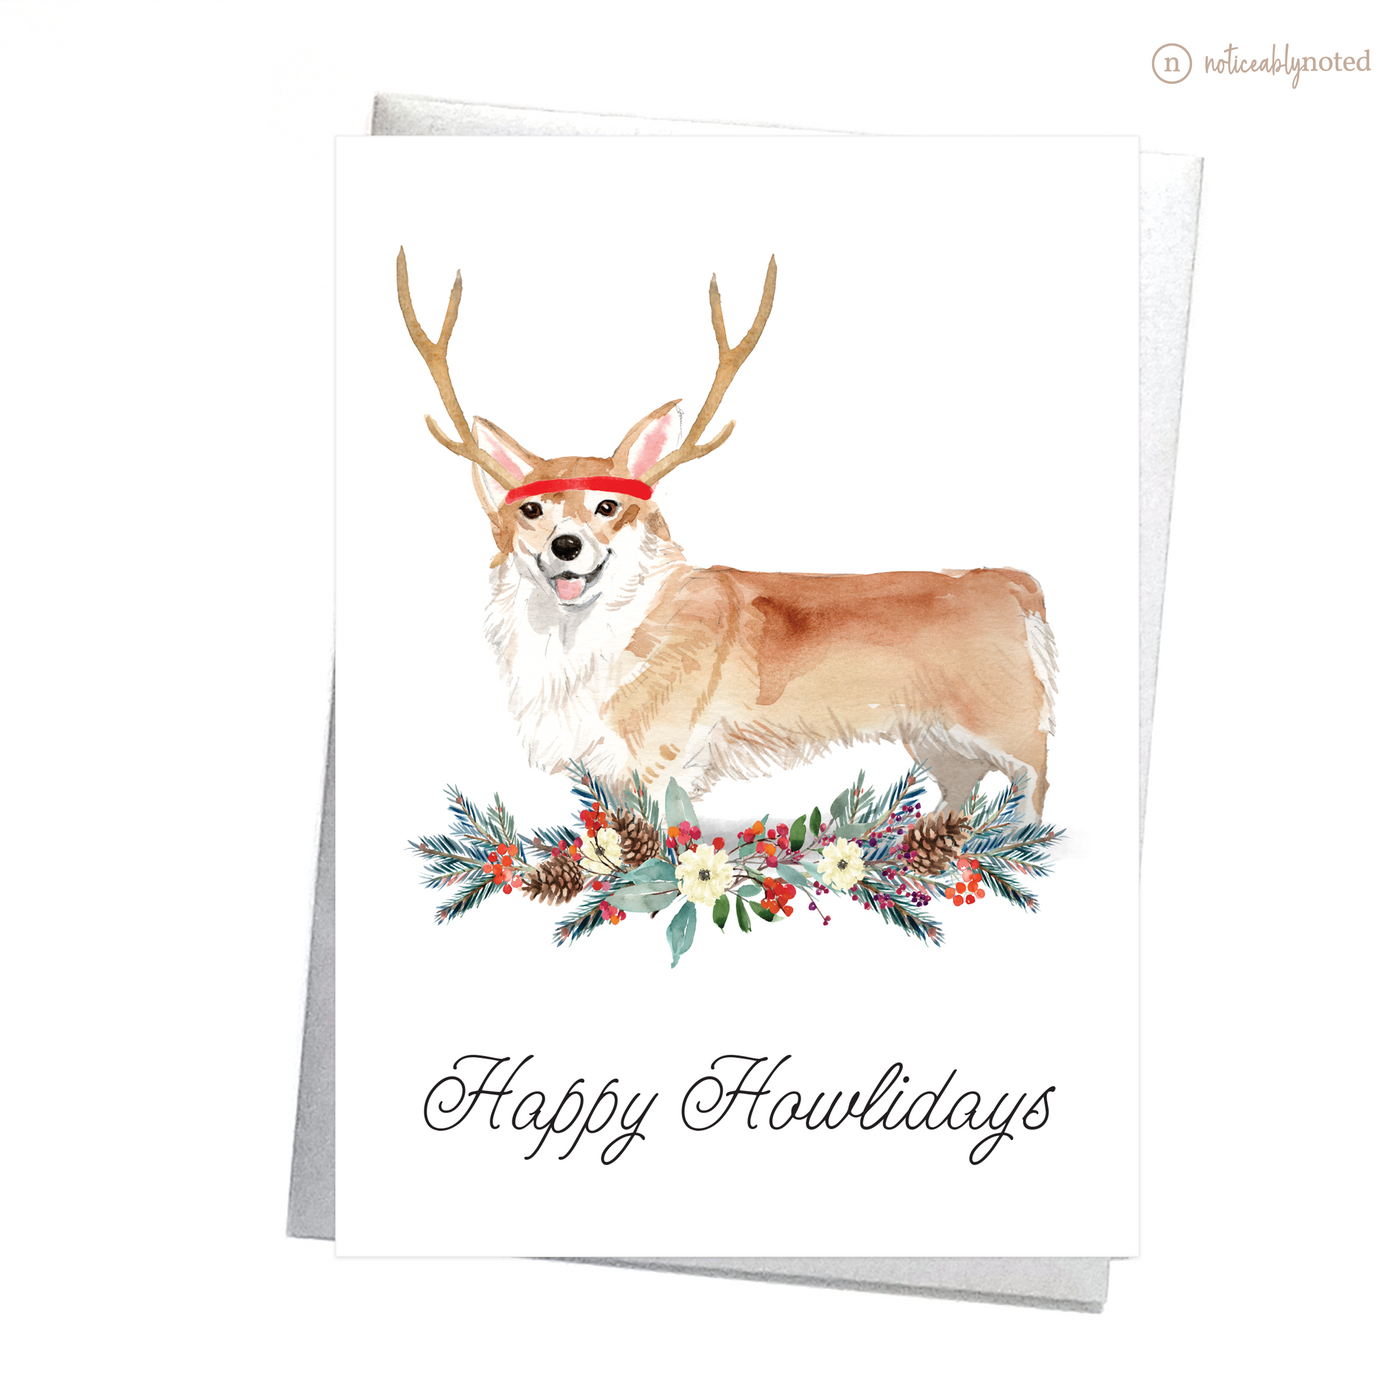 Corgi Dog Christmas Card | Noticeably Noted